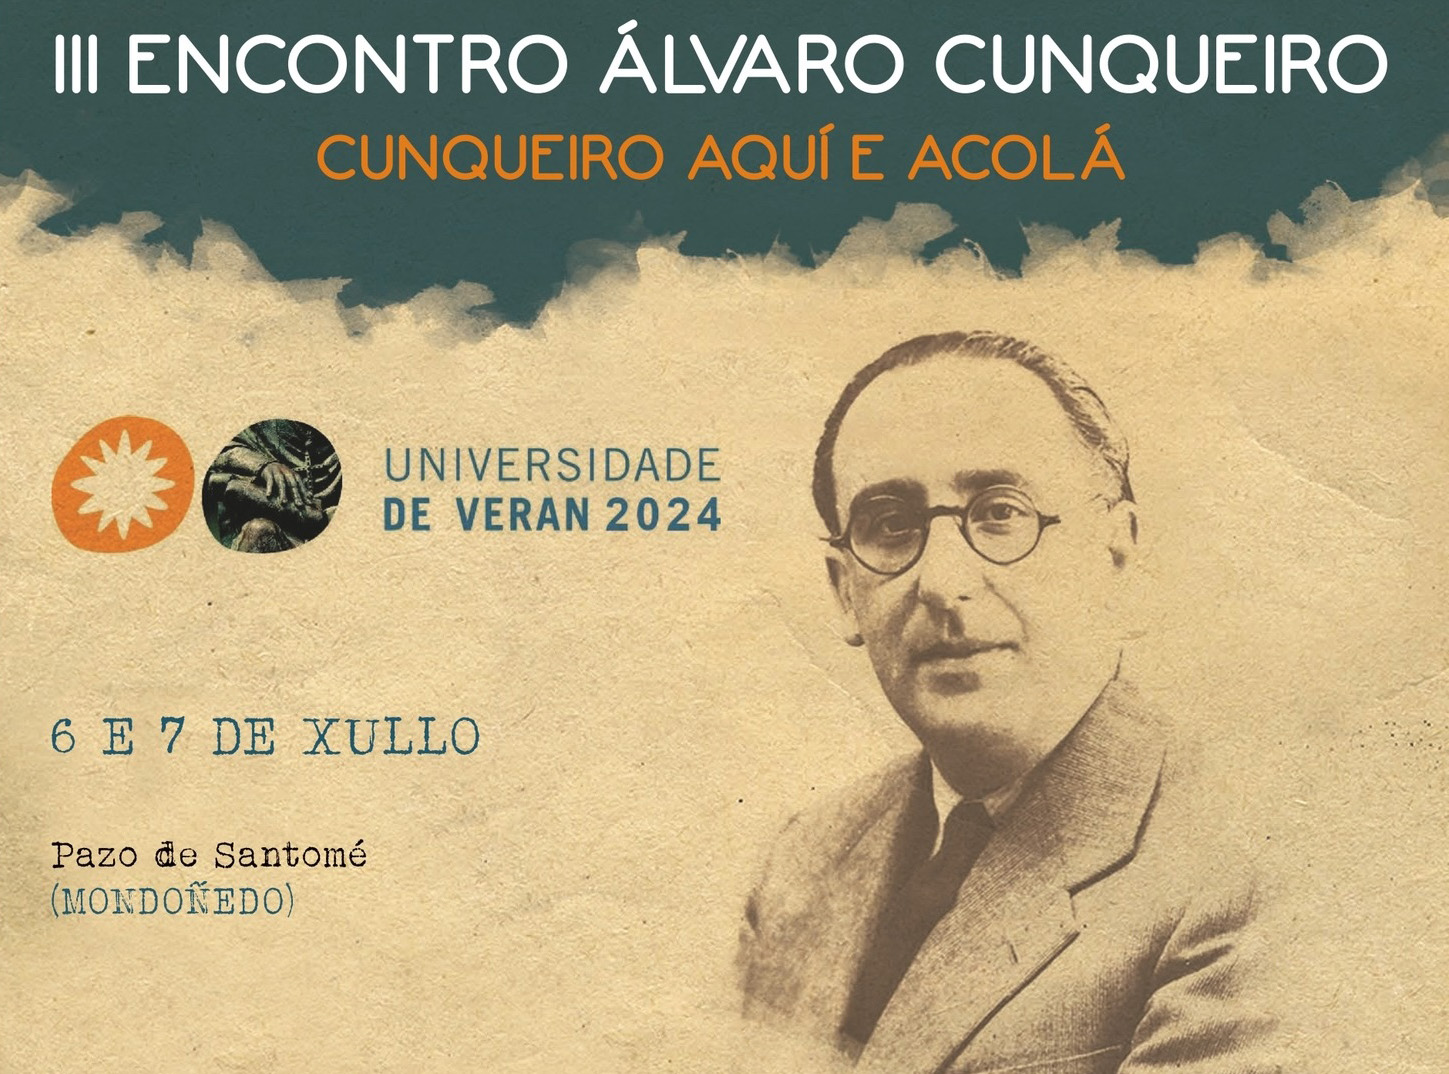 III Encuentro Álvaro Cunqueiro 